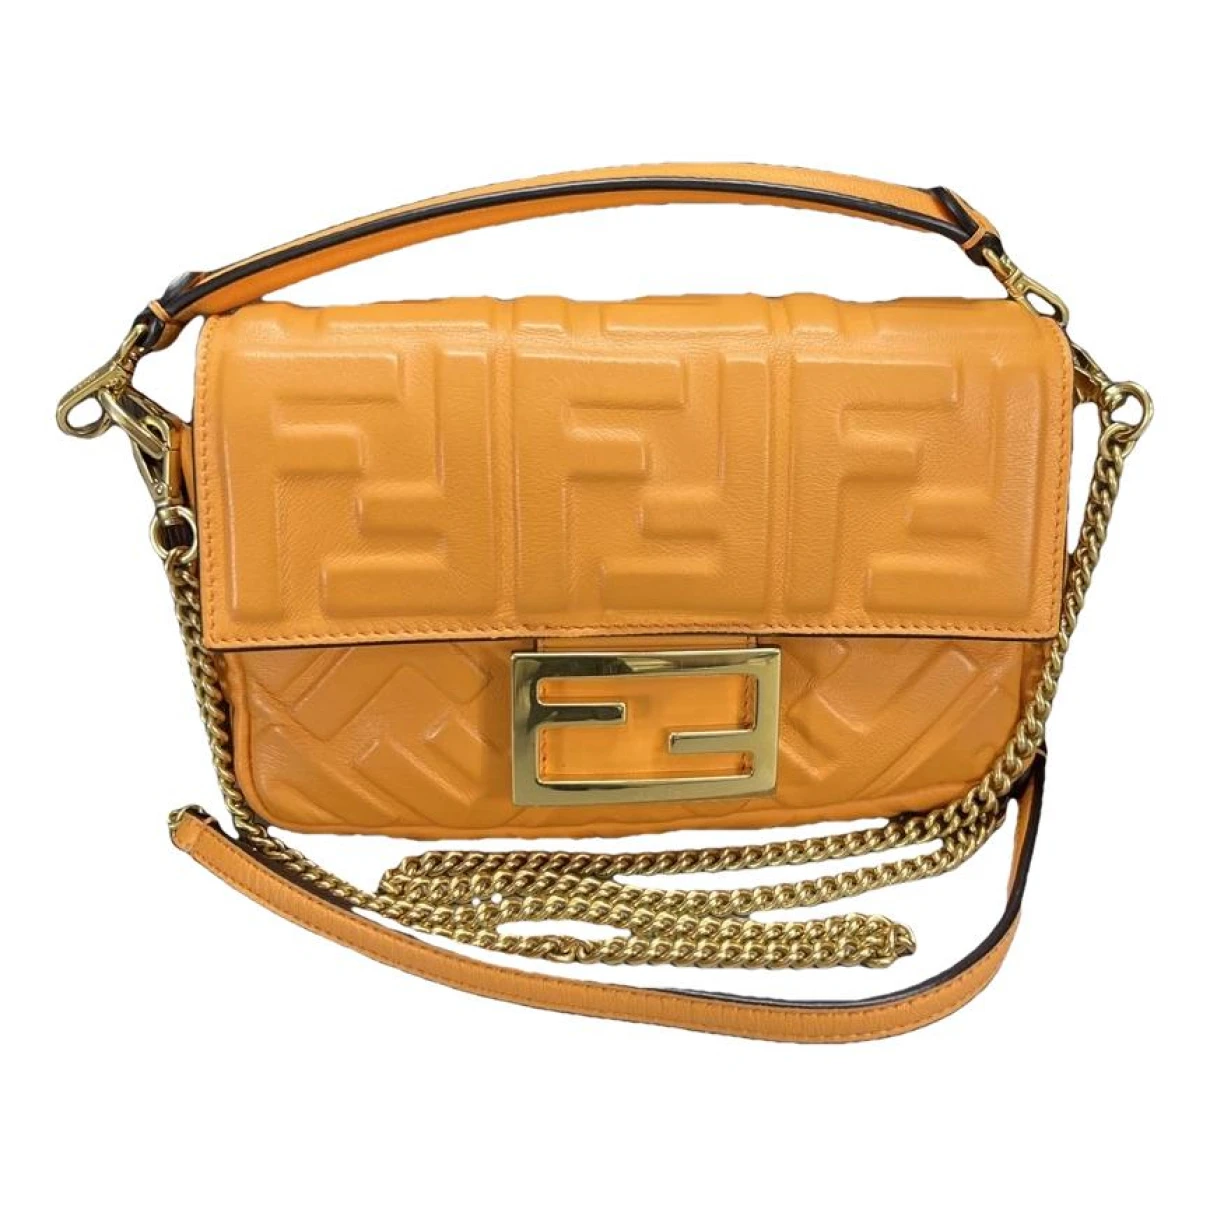 Pre-owned Fendi Baguette Leather Handbag In Orange